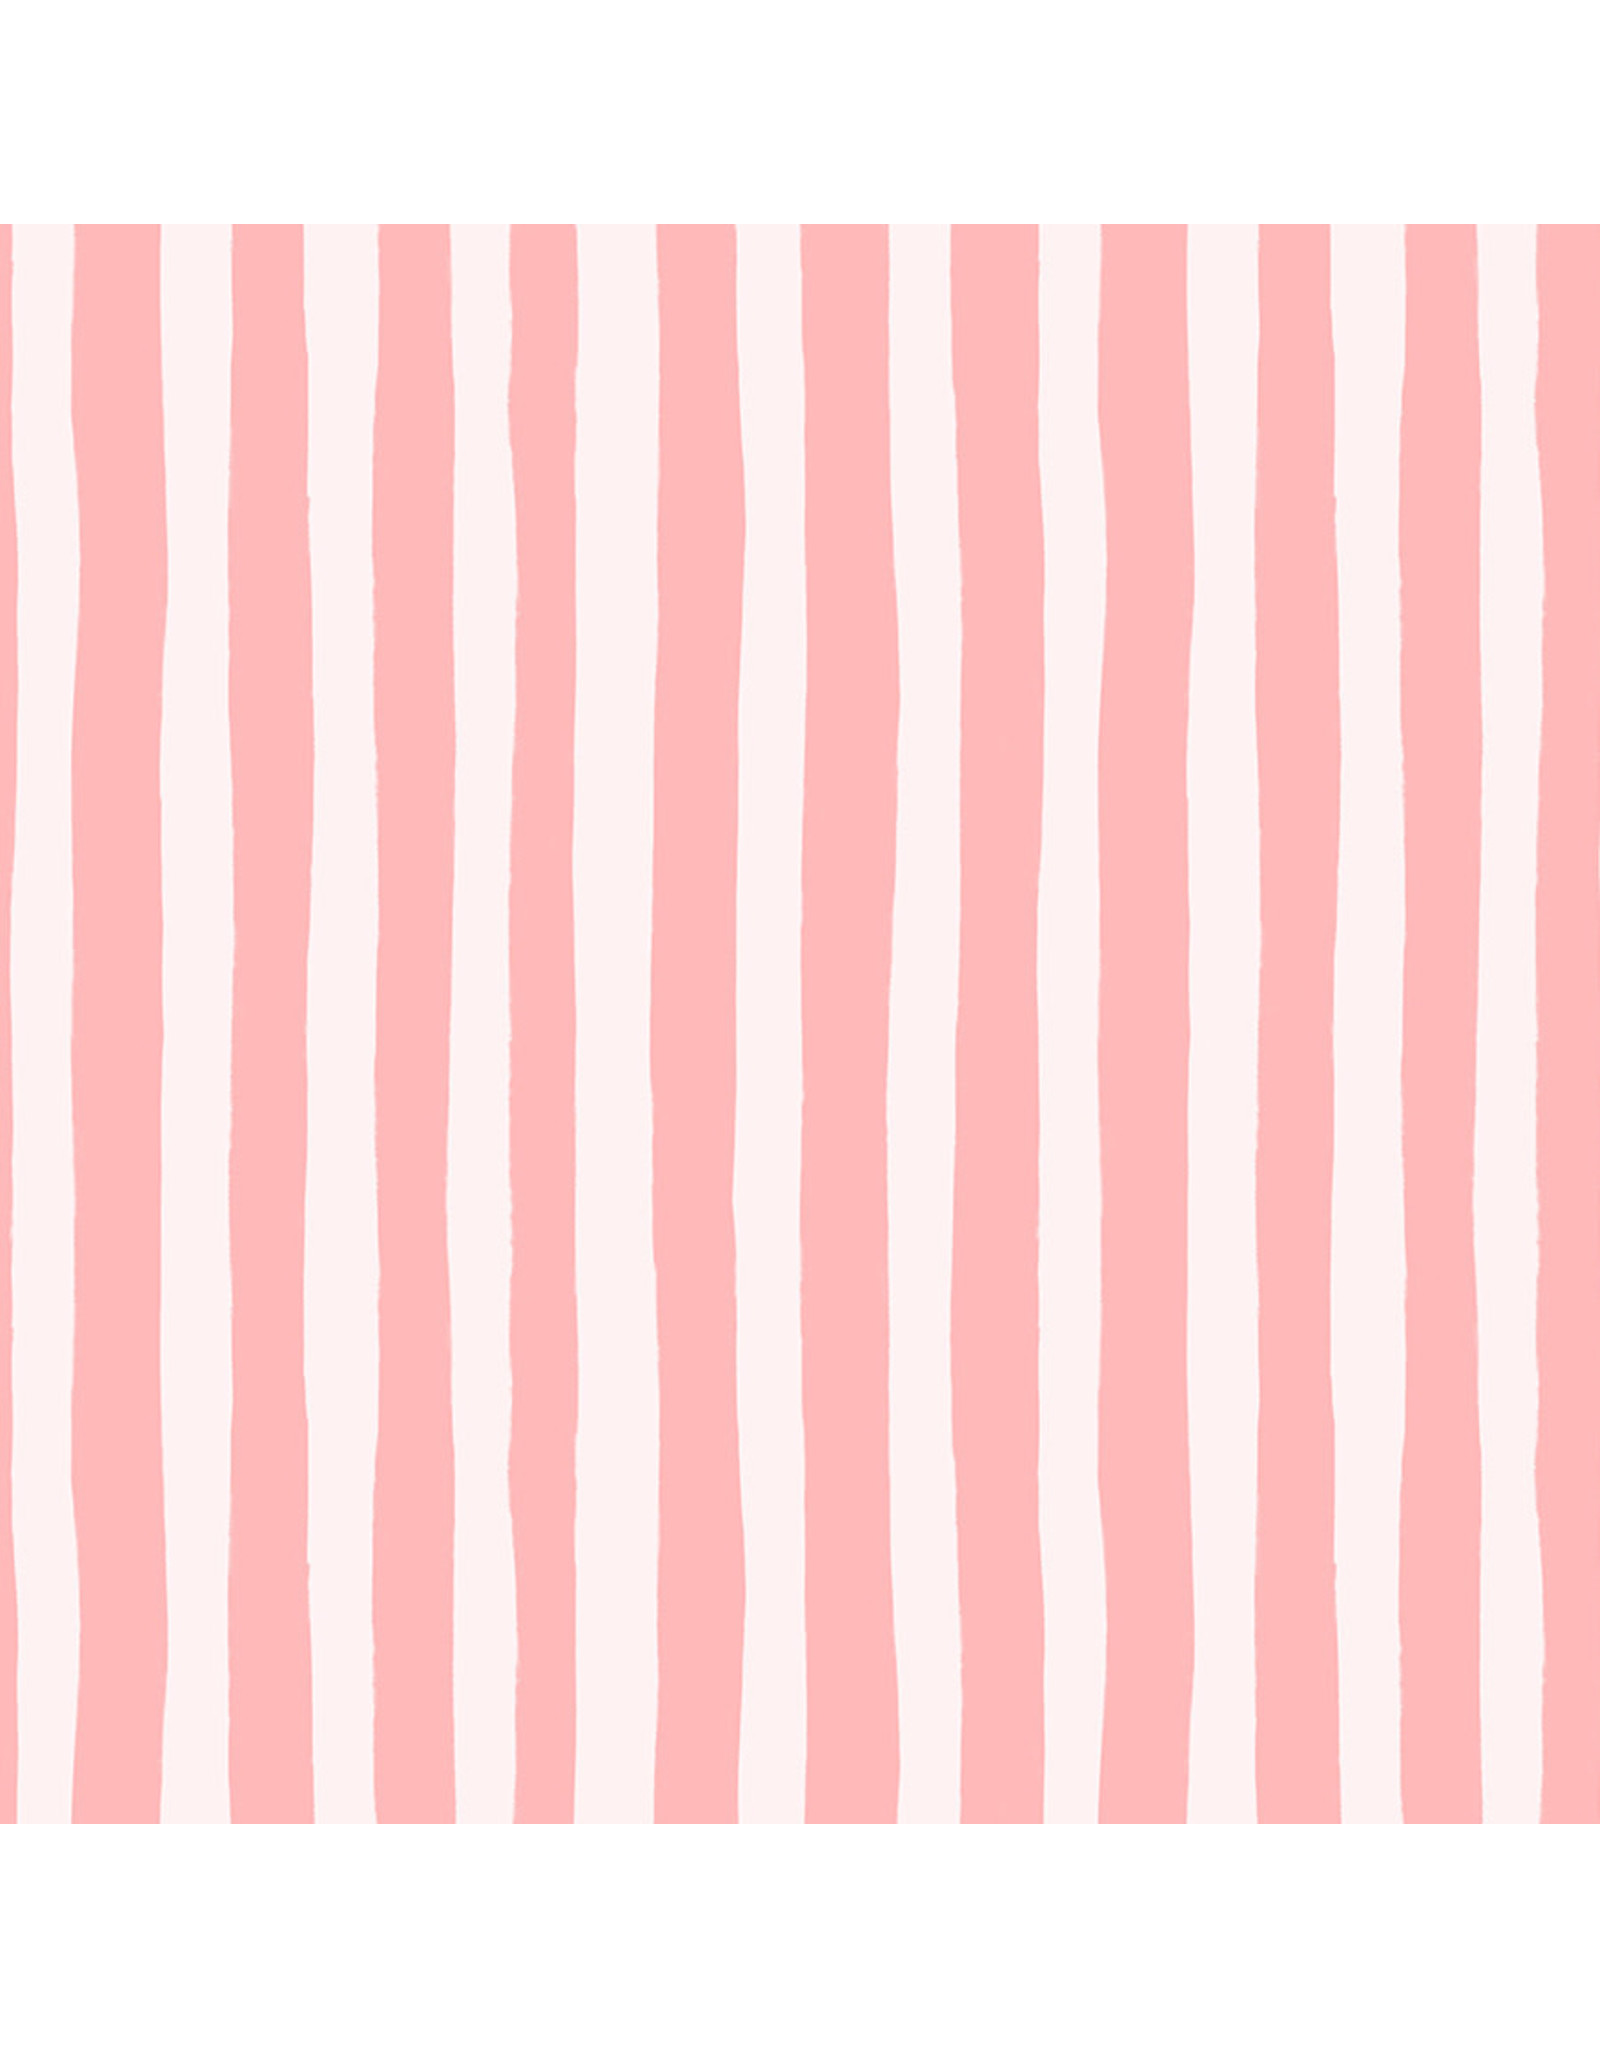 Phoebe Wahl Garden Jubilee, Stripes in Pink, Fabric Half-Yards